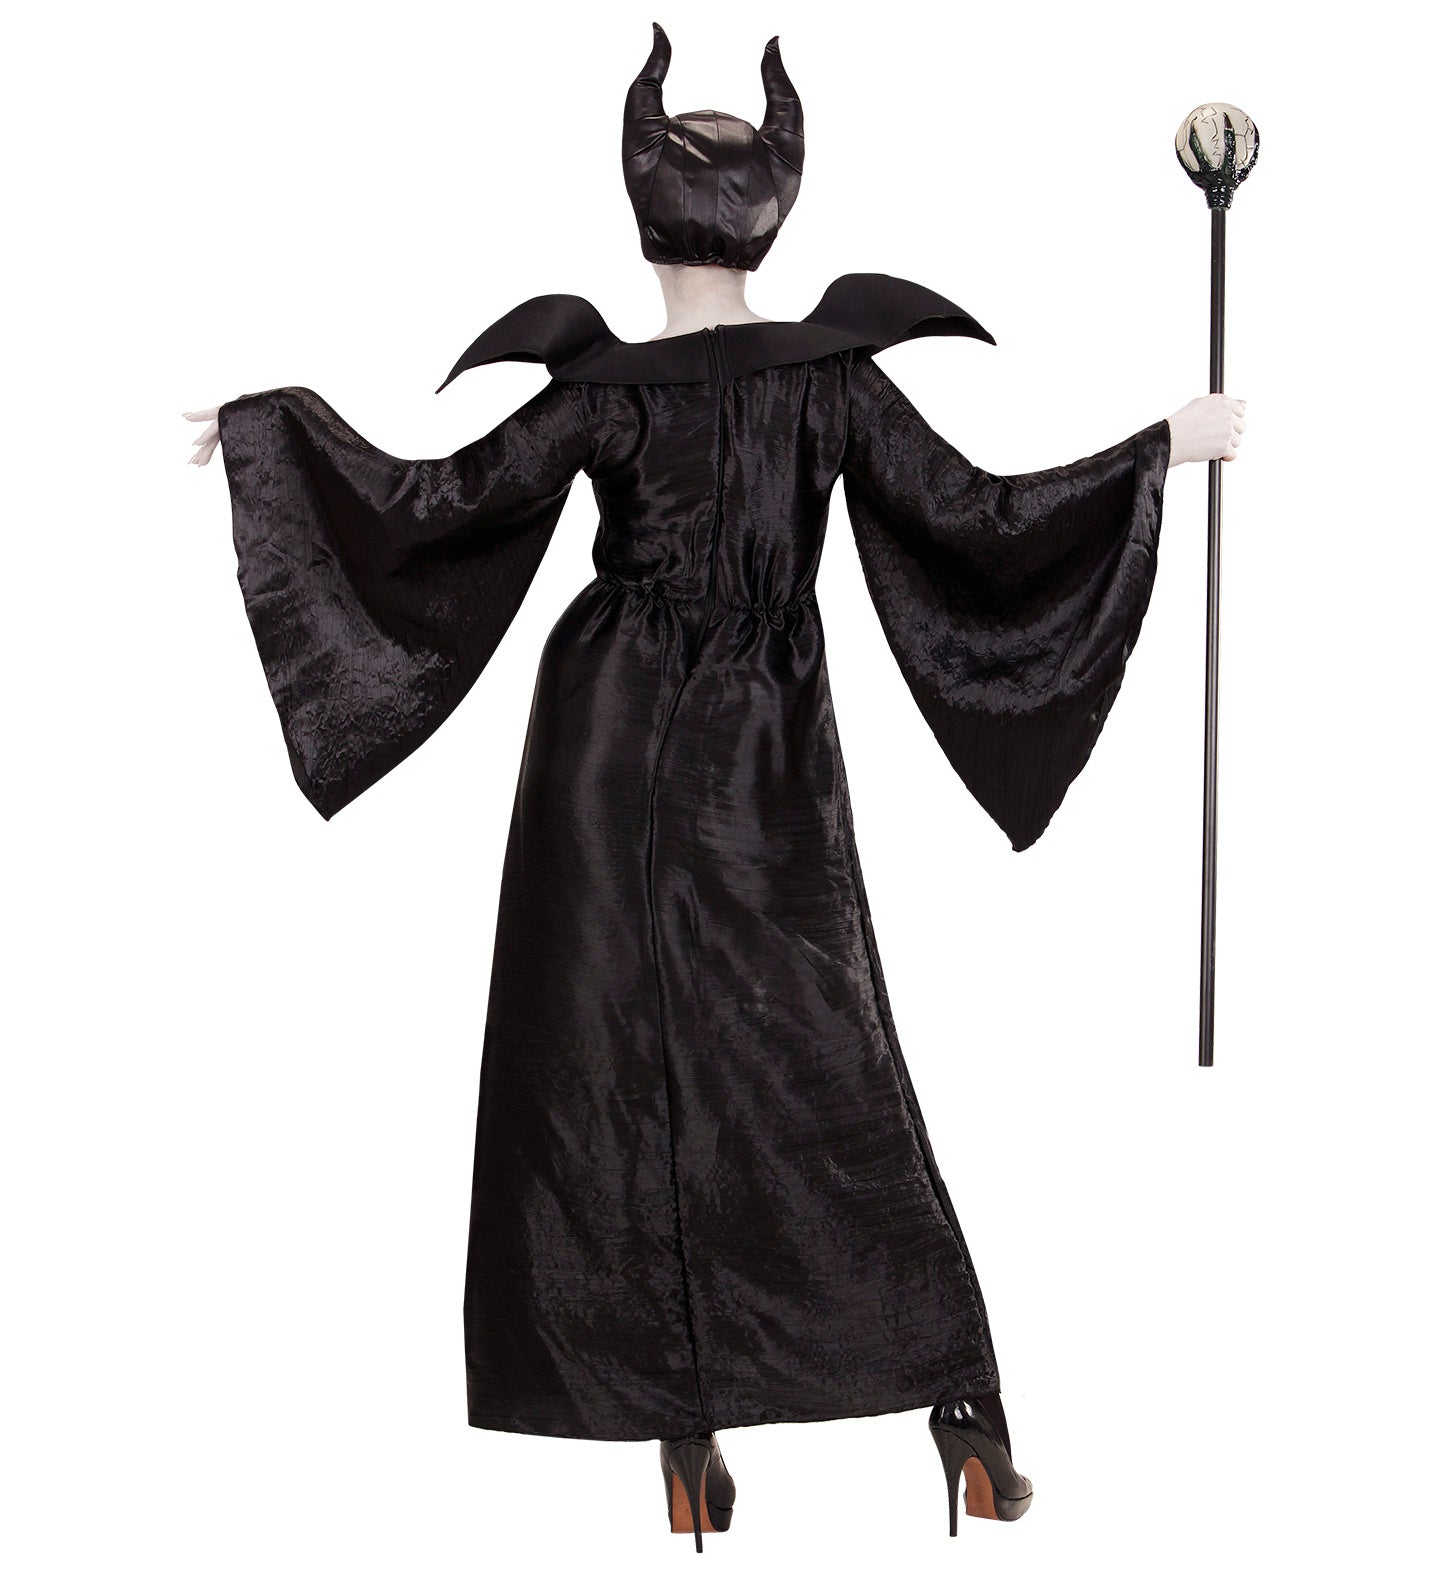 Malefica Costume Ladies Black rear